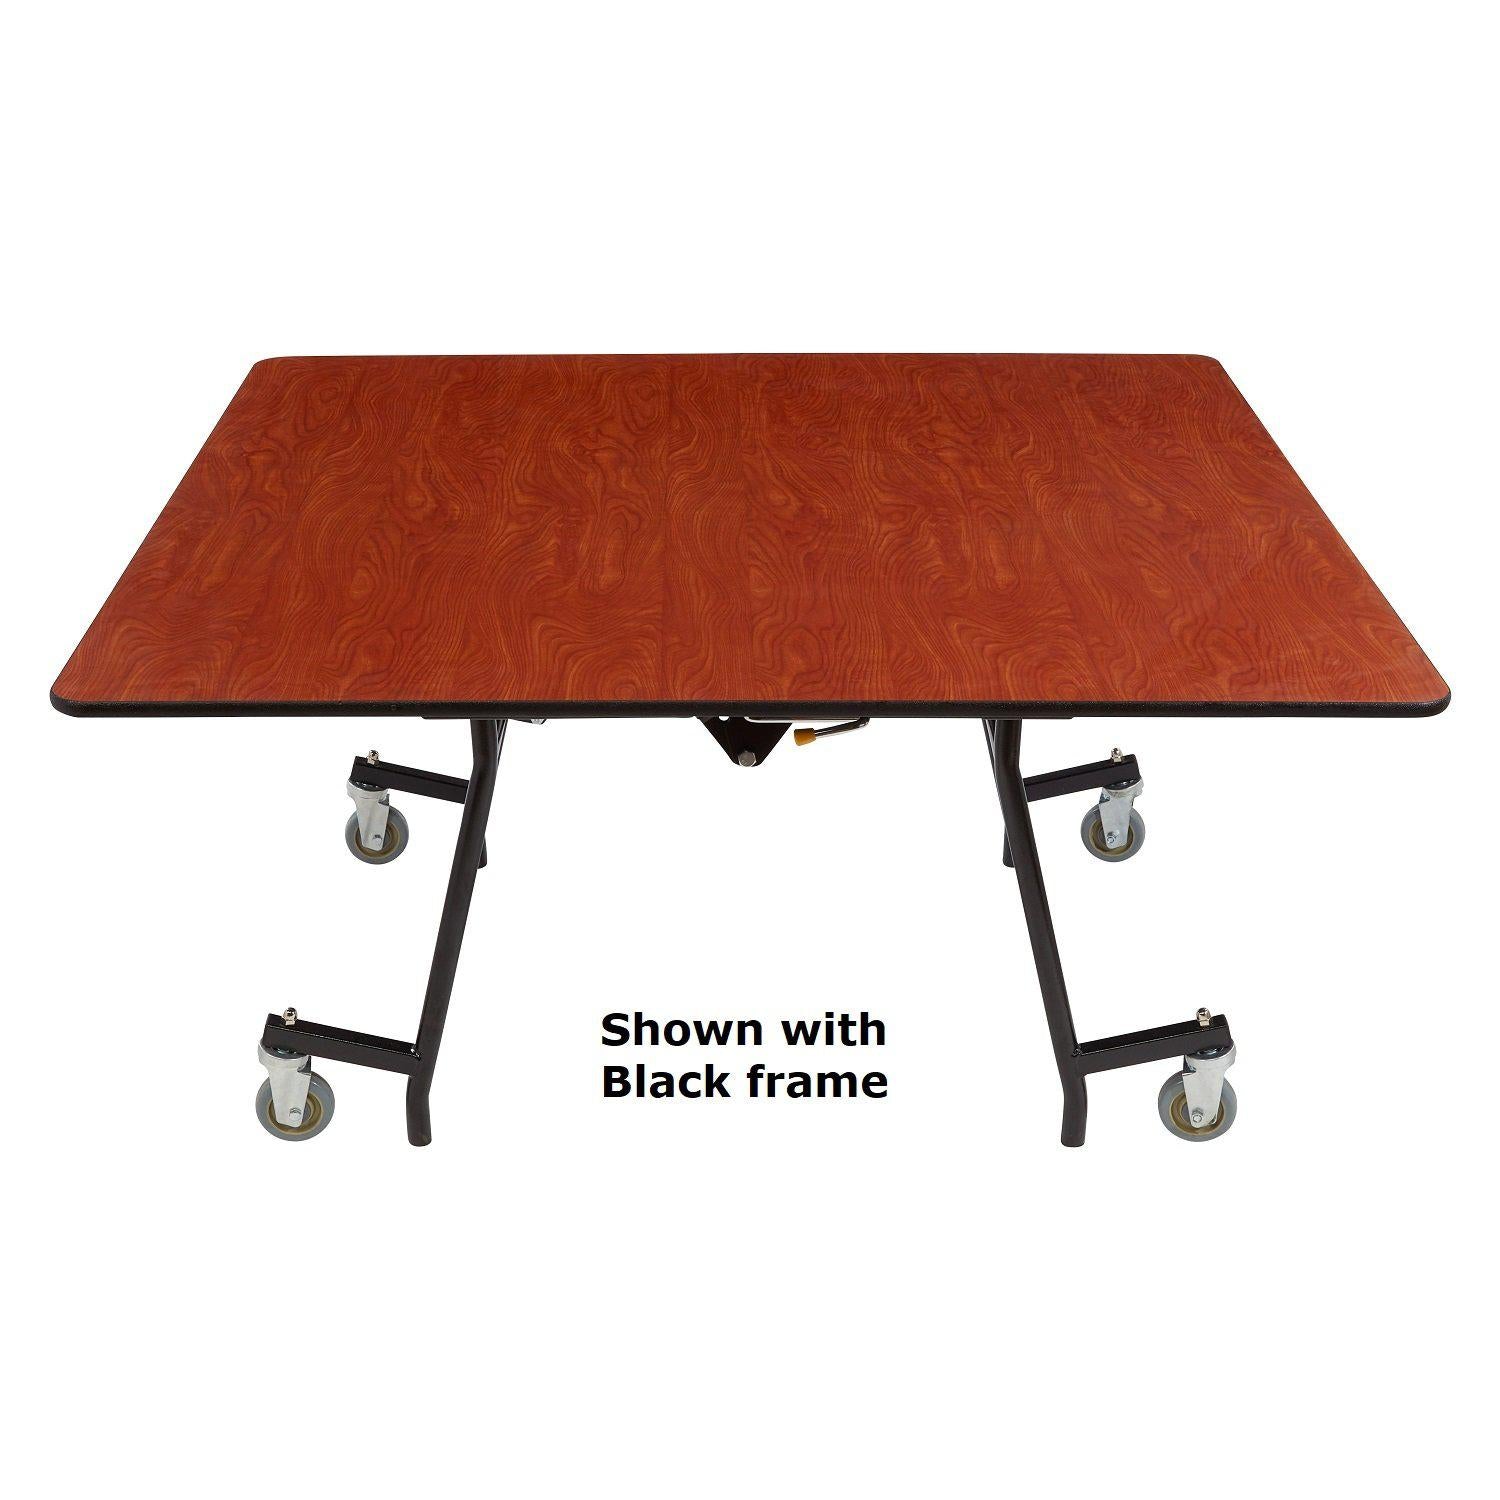 Mobile EasyFold Table, 60" Square, Plywood Core, Vinyl T-Mold Edge, Chrome Frame